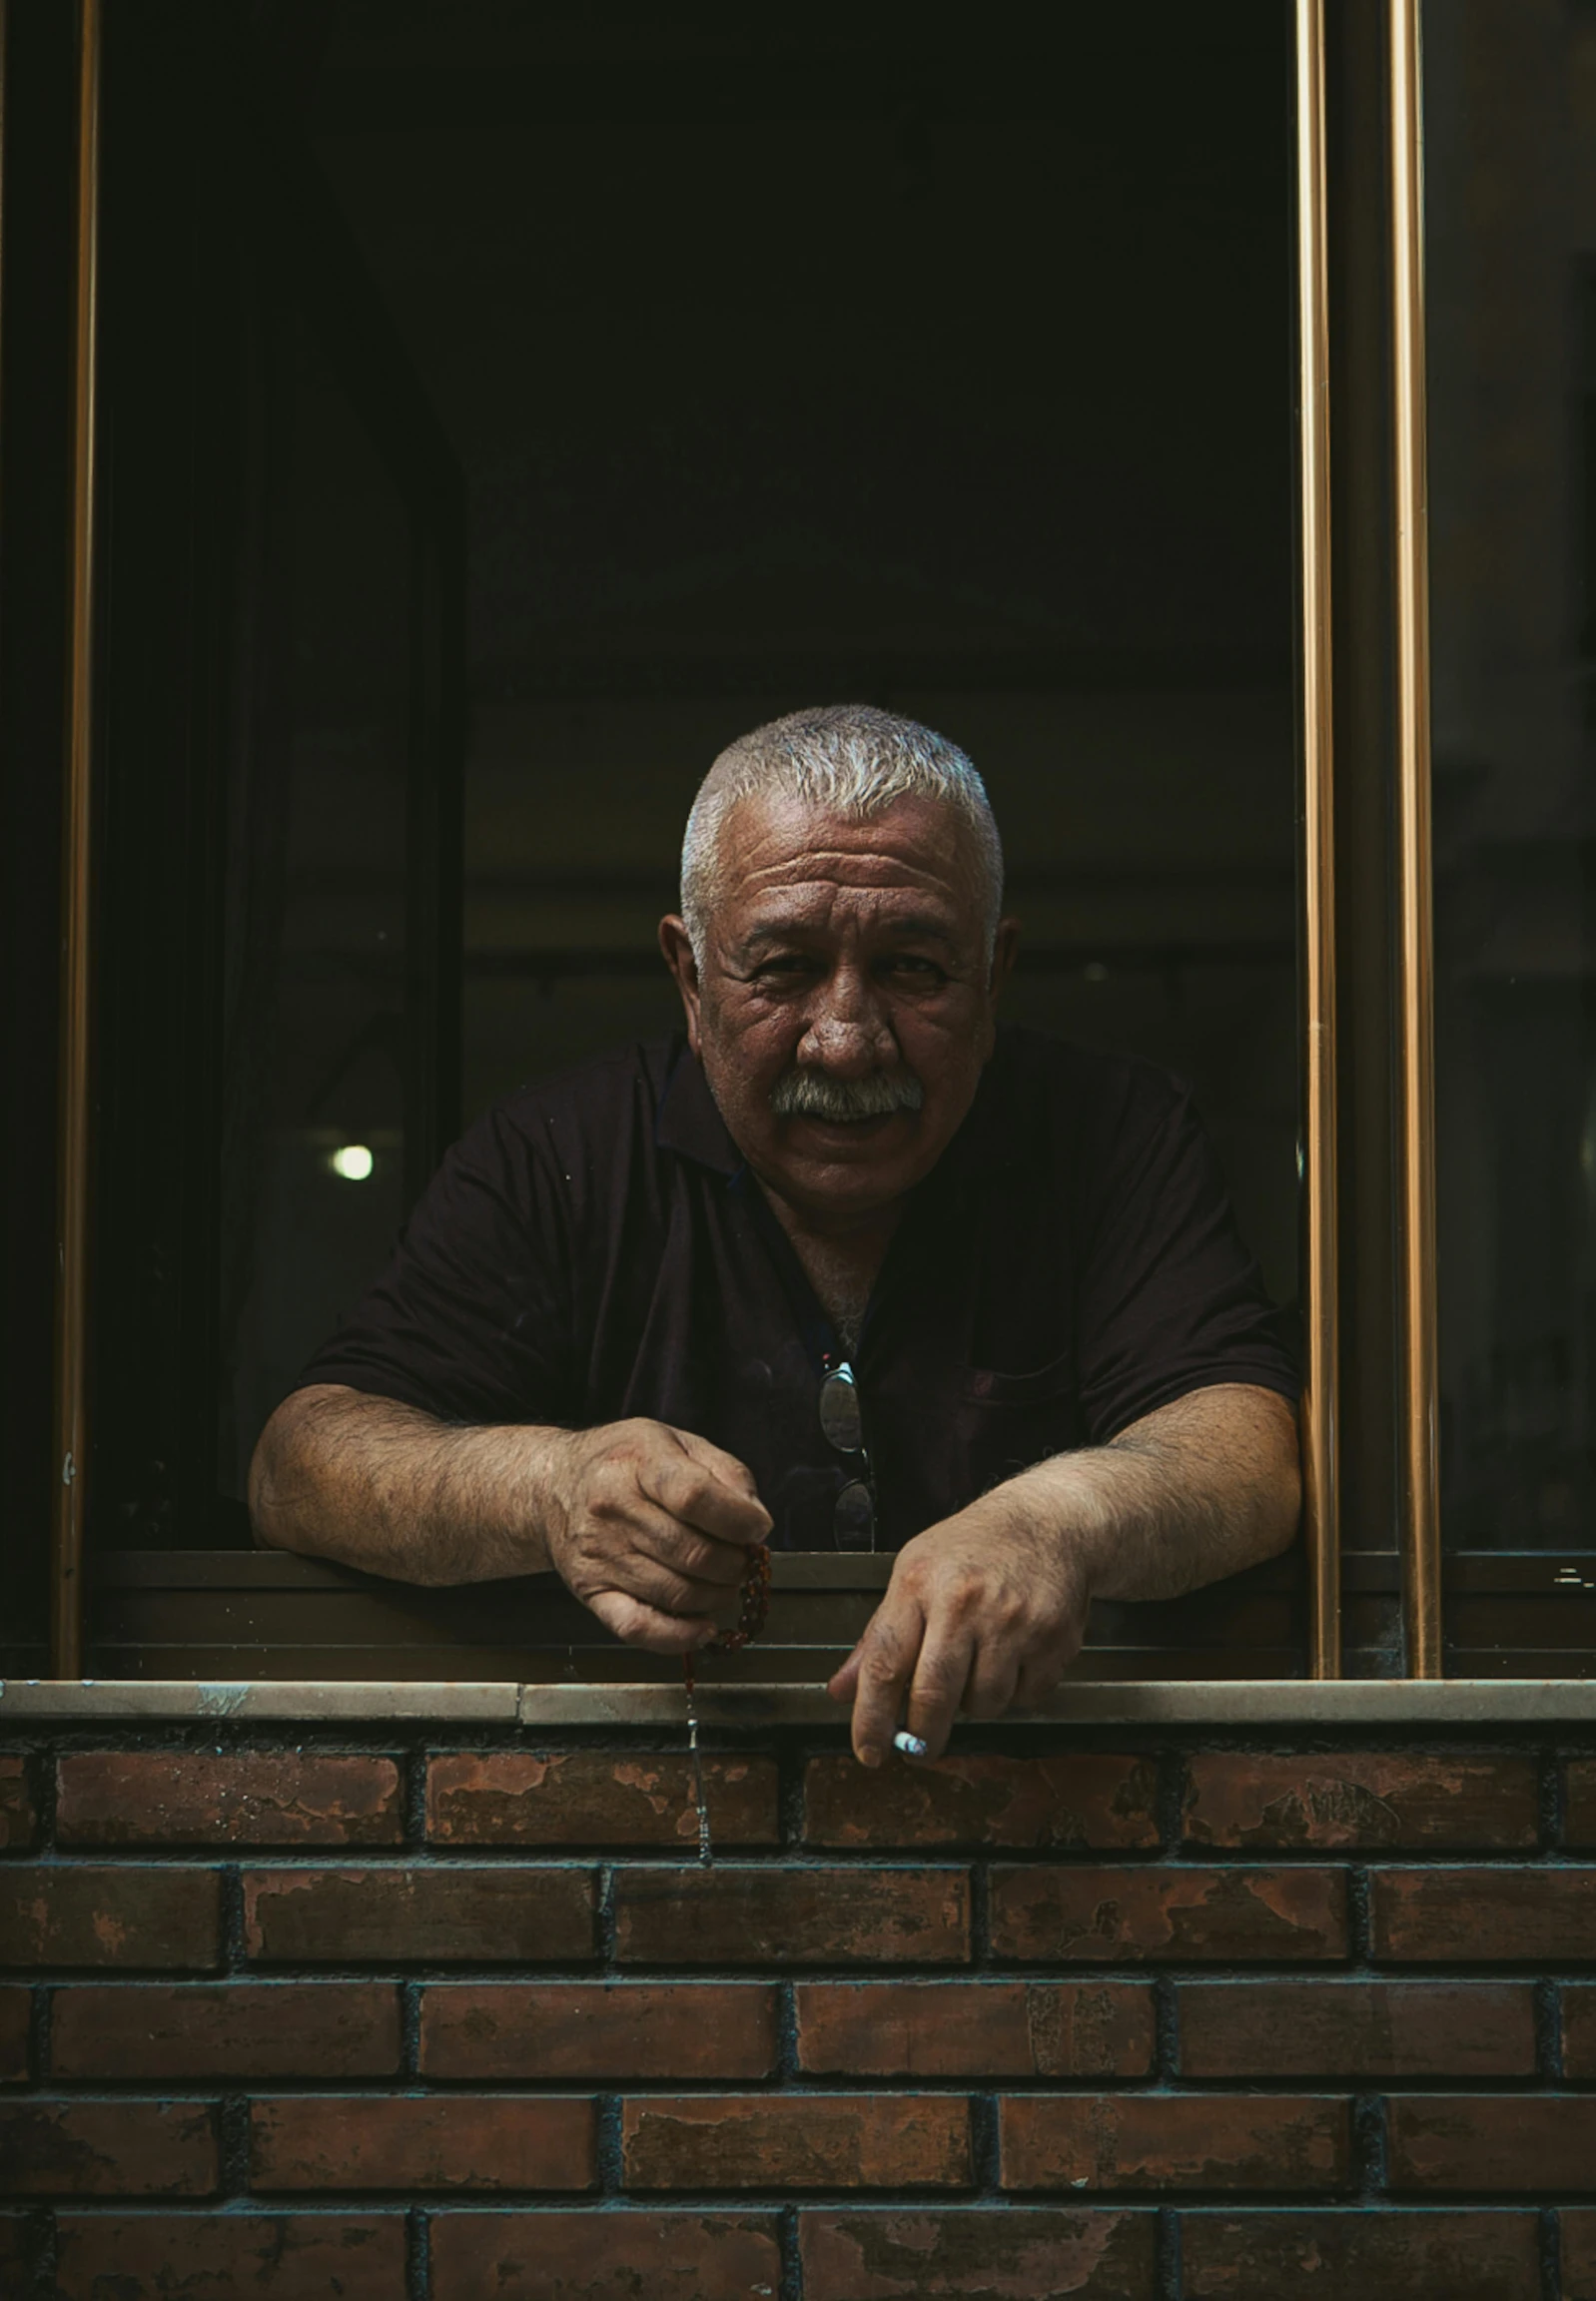 an older man leans on a window ledge